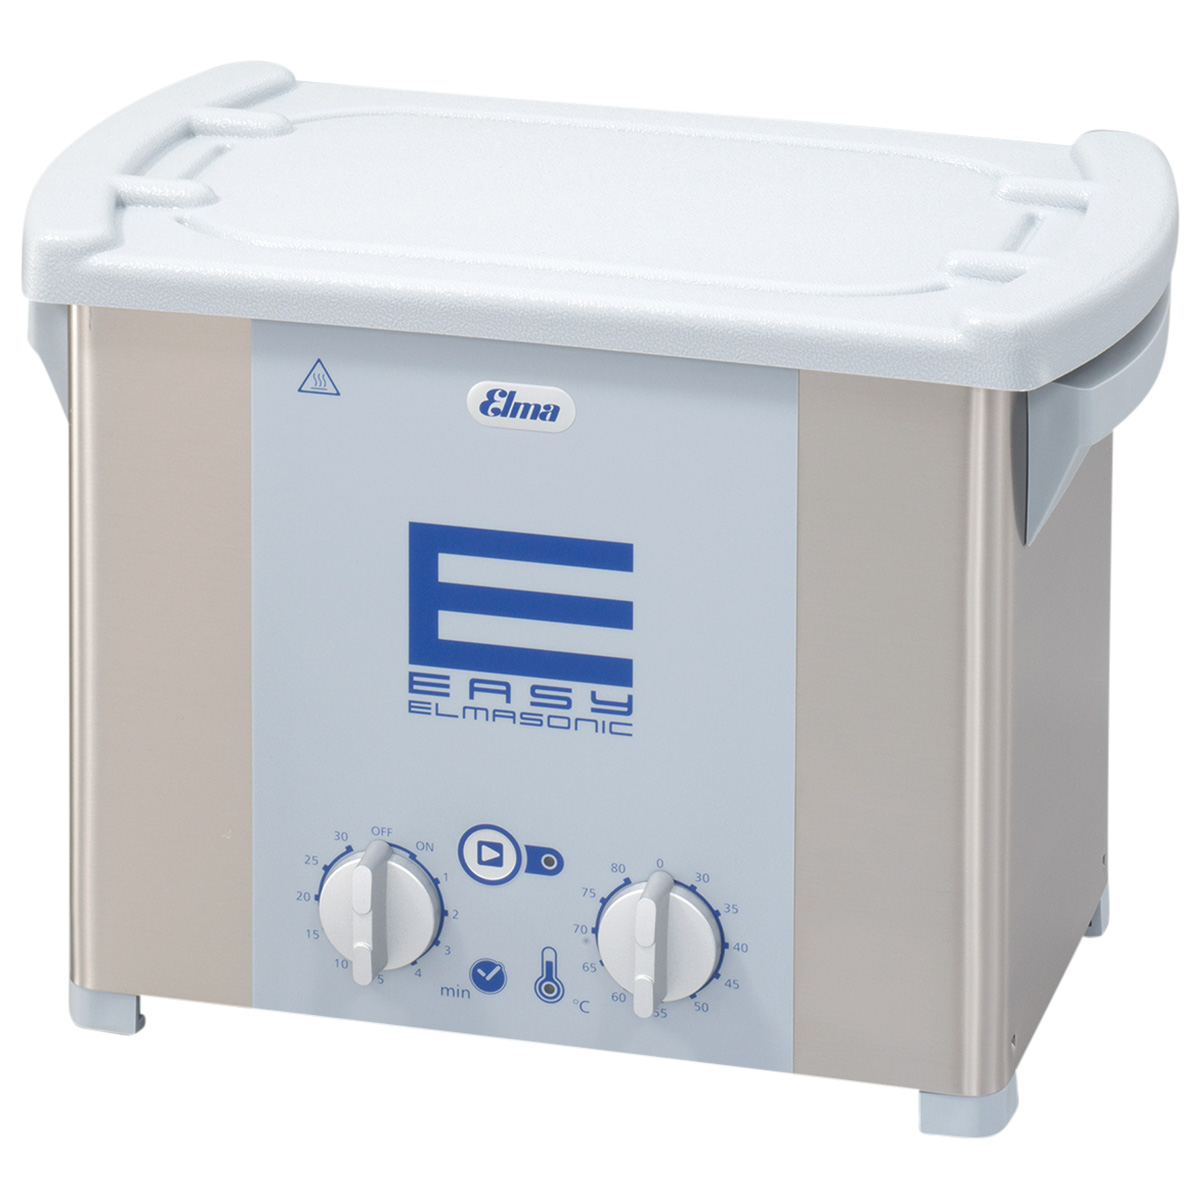 Elmasonic Easy 30H ultrasonic unit, with heating, 220 - 240 V